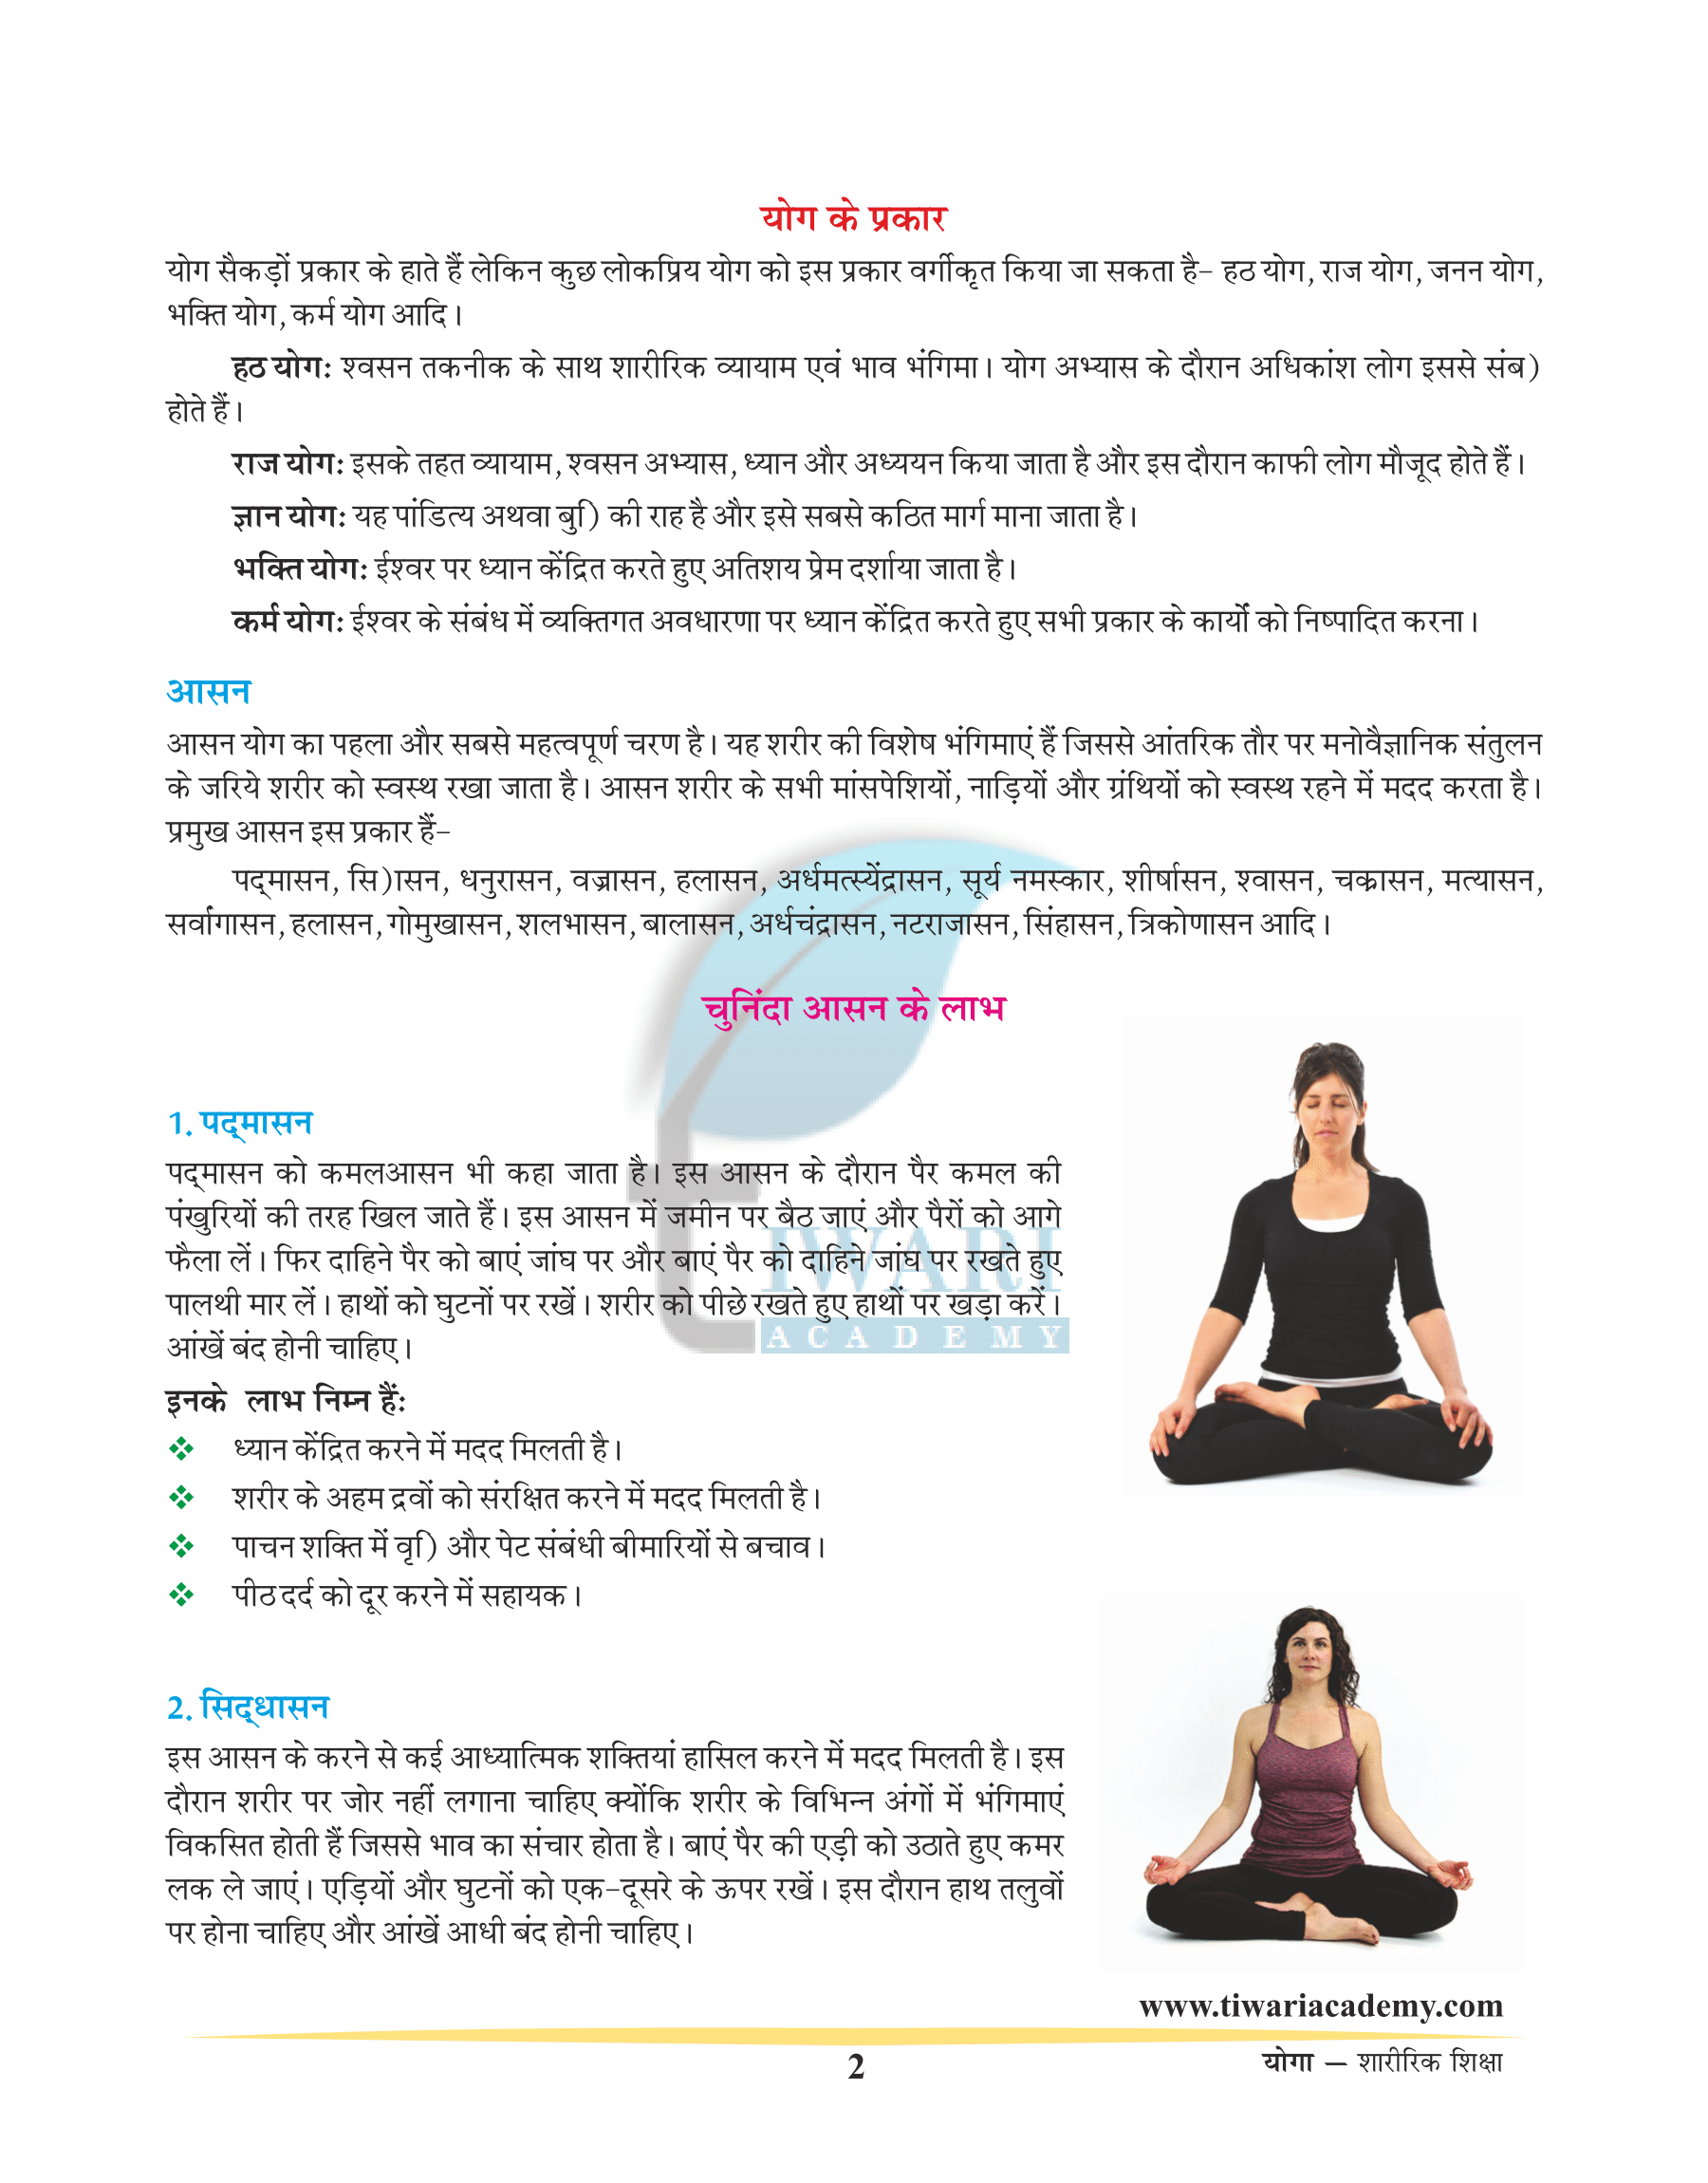 84 Yoga Asanas All in One | PDF | Mind–Body Interventions | Meditation